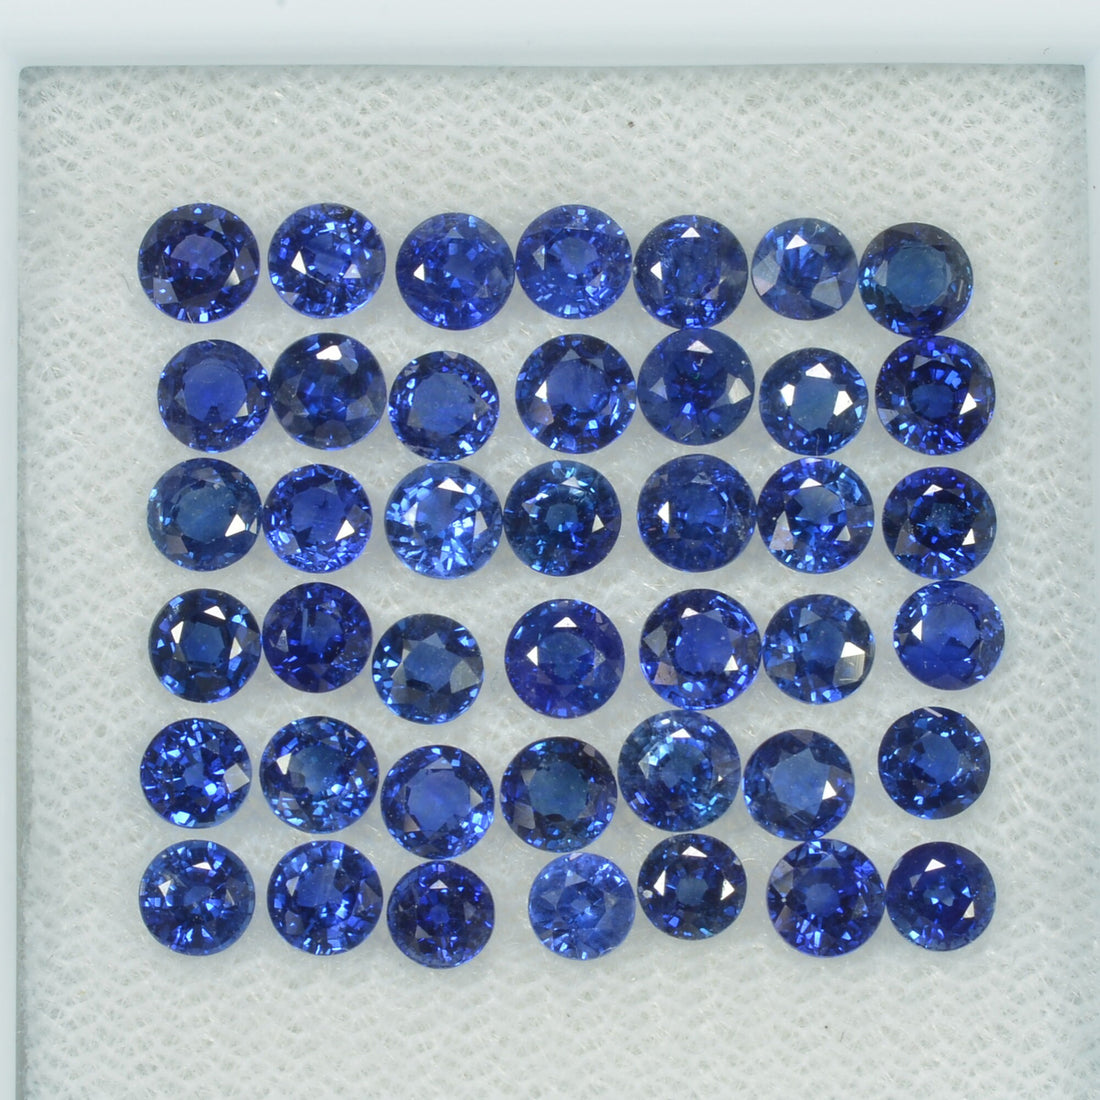 2.7-4.7 mm Natural Blue Sapphire Loose Gemstone Round Diamond Cut Vs Quality Color